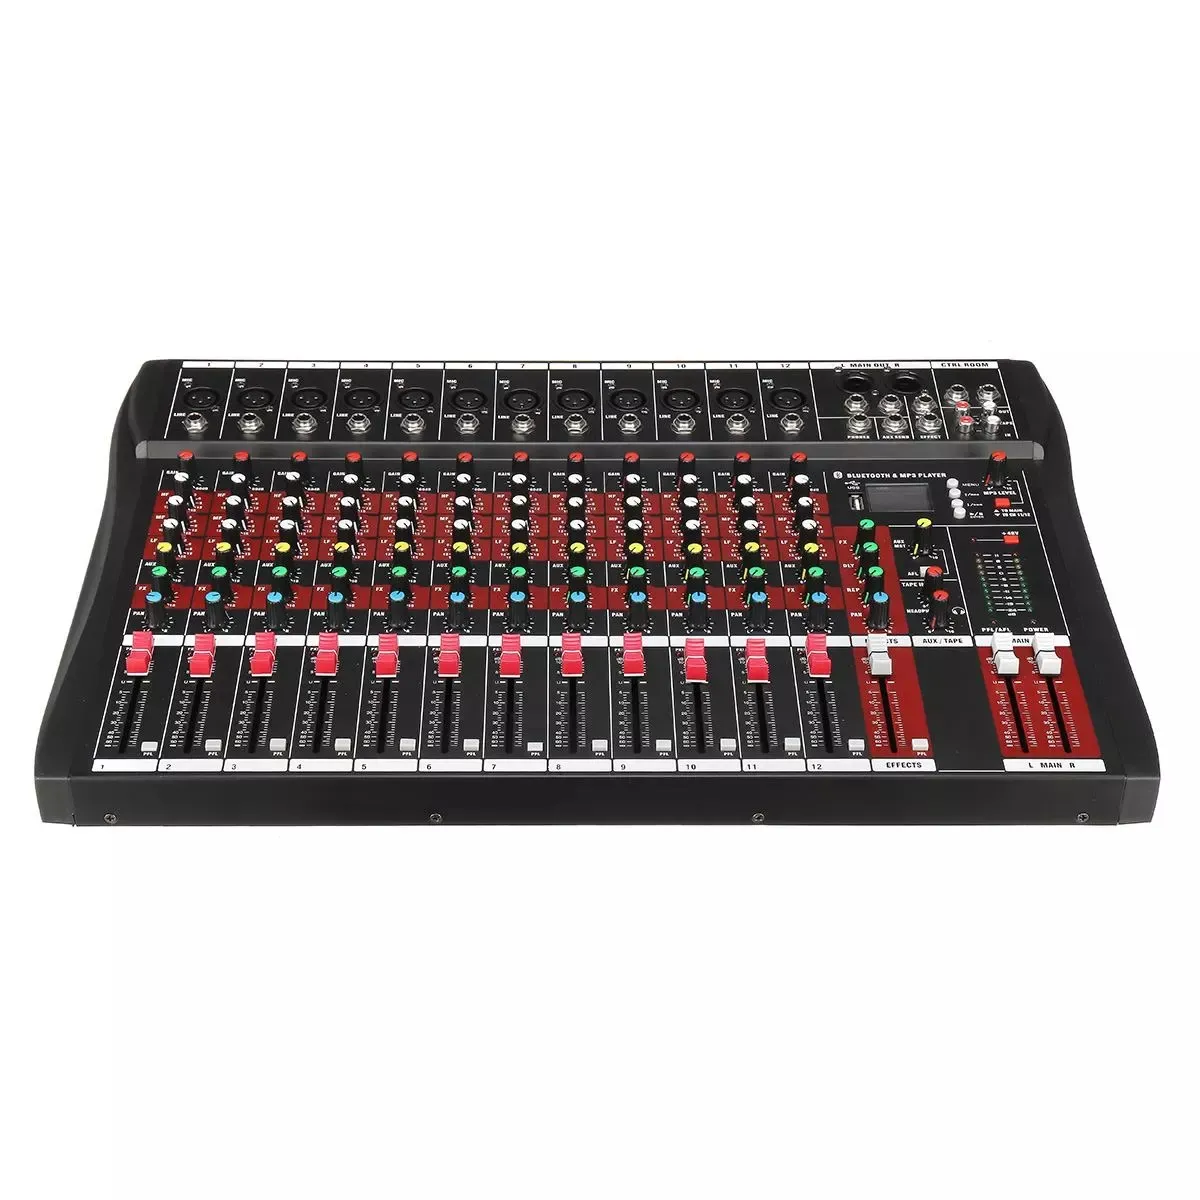 2019 nuovo equalizzatore mixer stadio amplificatore enping glay audio dx16